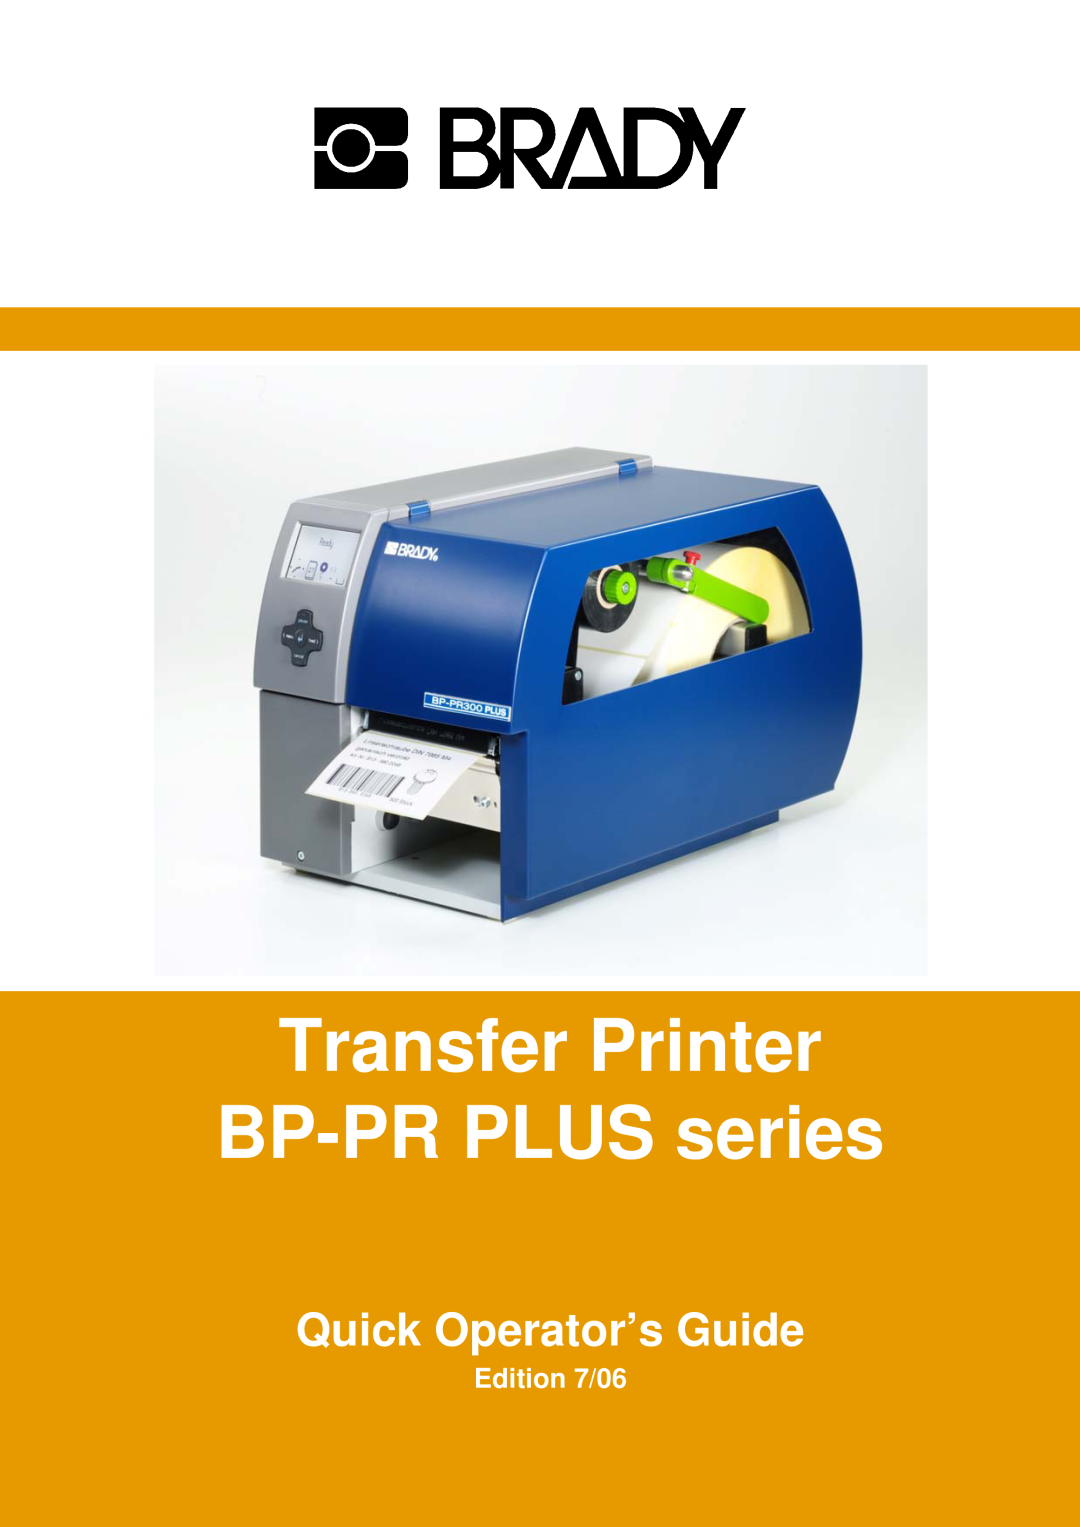 Brady BP-PR PLUS Series manual Transfer Printer BP-PR PLUS series, Quick Operator’s Guide, Edition 7/06 